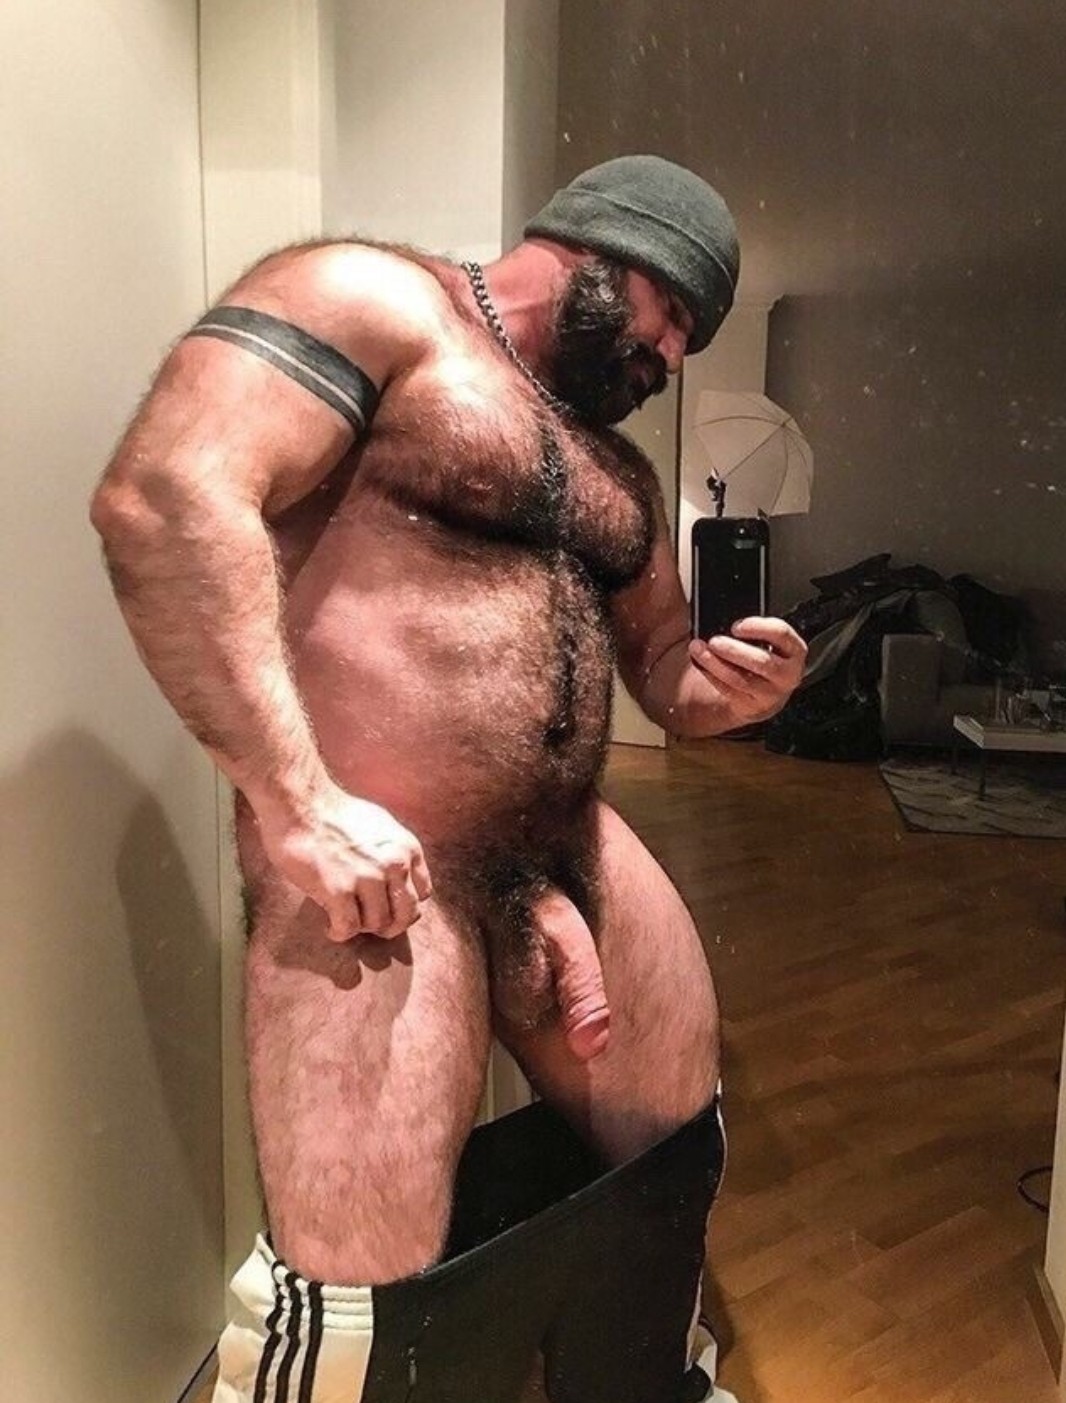 Gay dildo, gay muscle, gay bear. 